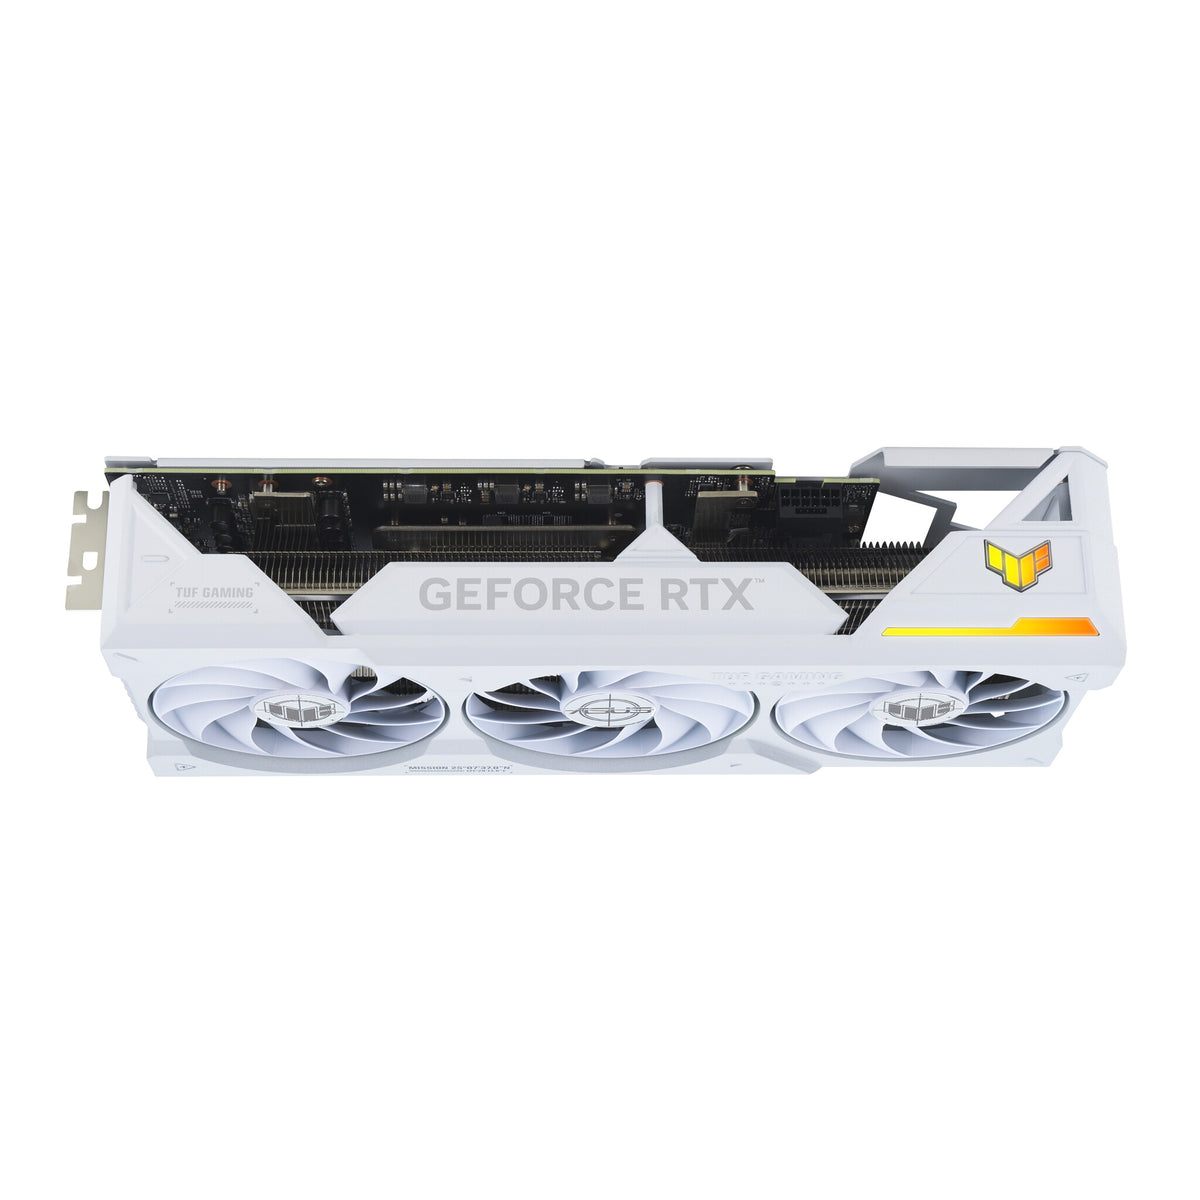 ASUS TUF Gaming White OC Edition - NVIDIA GeForce RTX 4070 Ti SUPER 16 GB GDDR6X graphics card